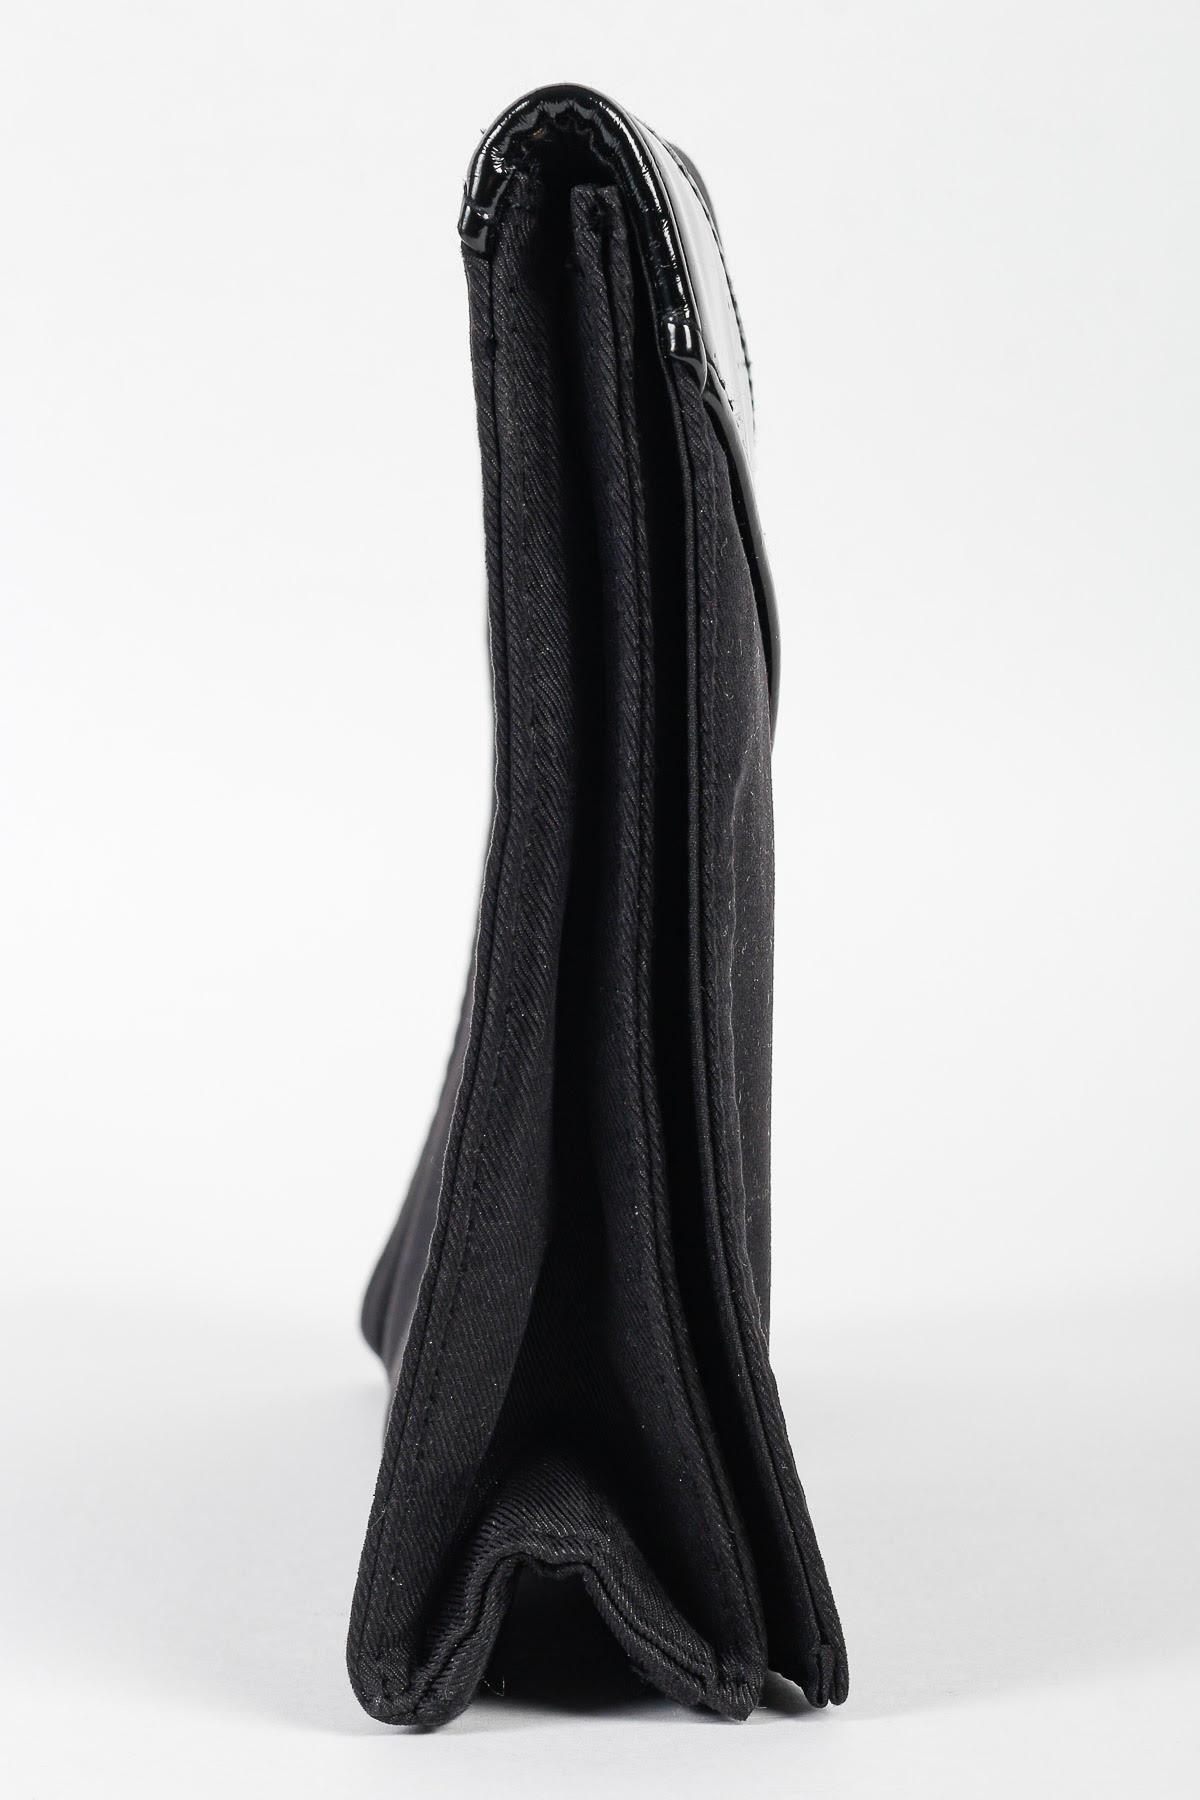 Modern Vintage Yves Saint-Laurent Clutch Bag, Black Leather, 20th Century. For Sale